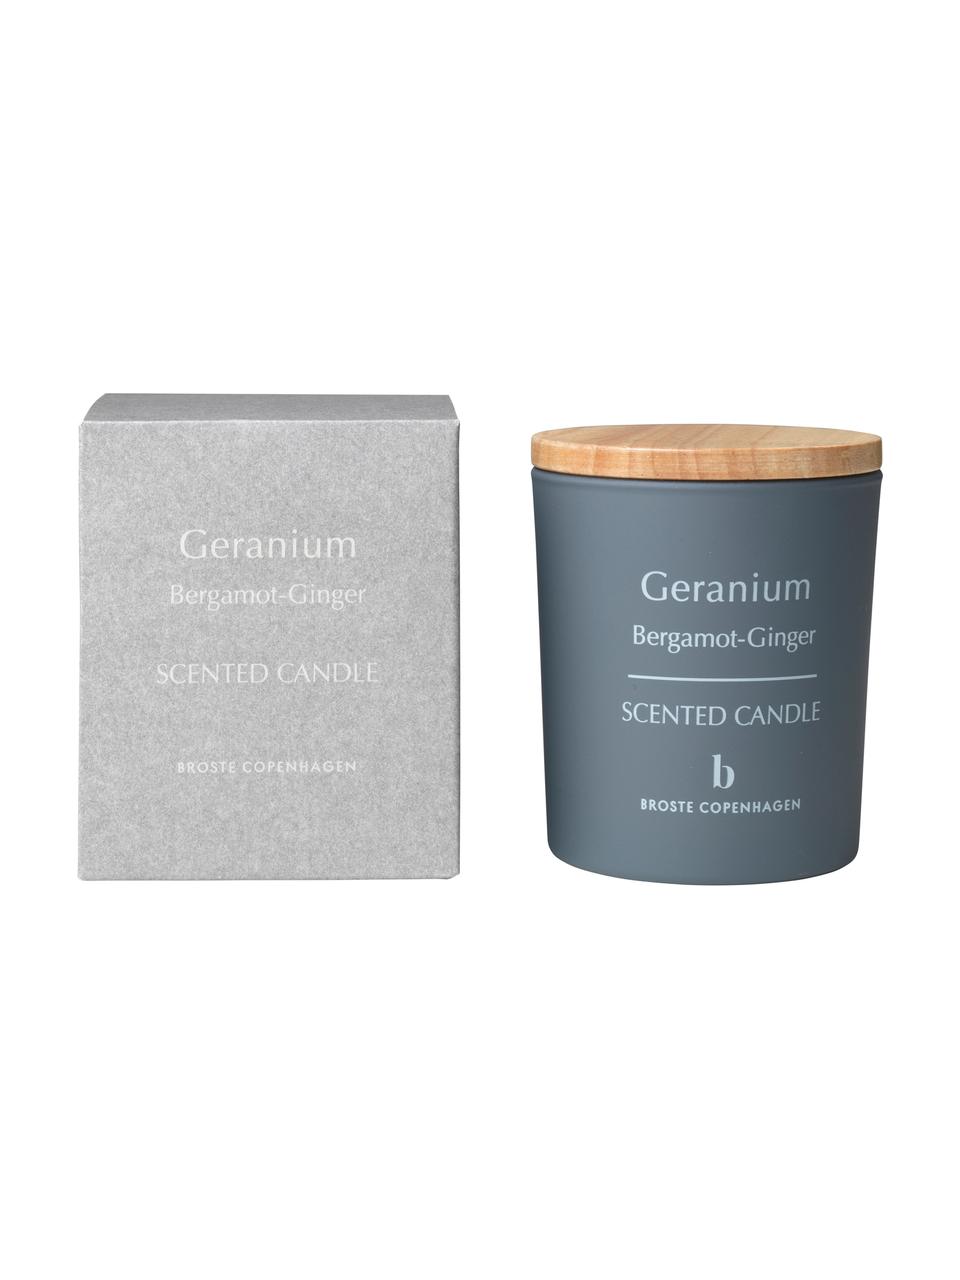 Bougie parfumée Geranium (bergamote, gingembre), Gris, brun clair